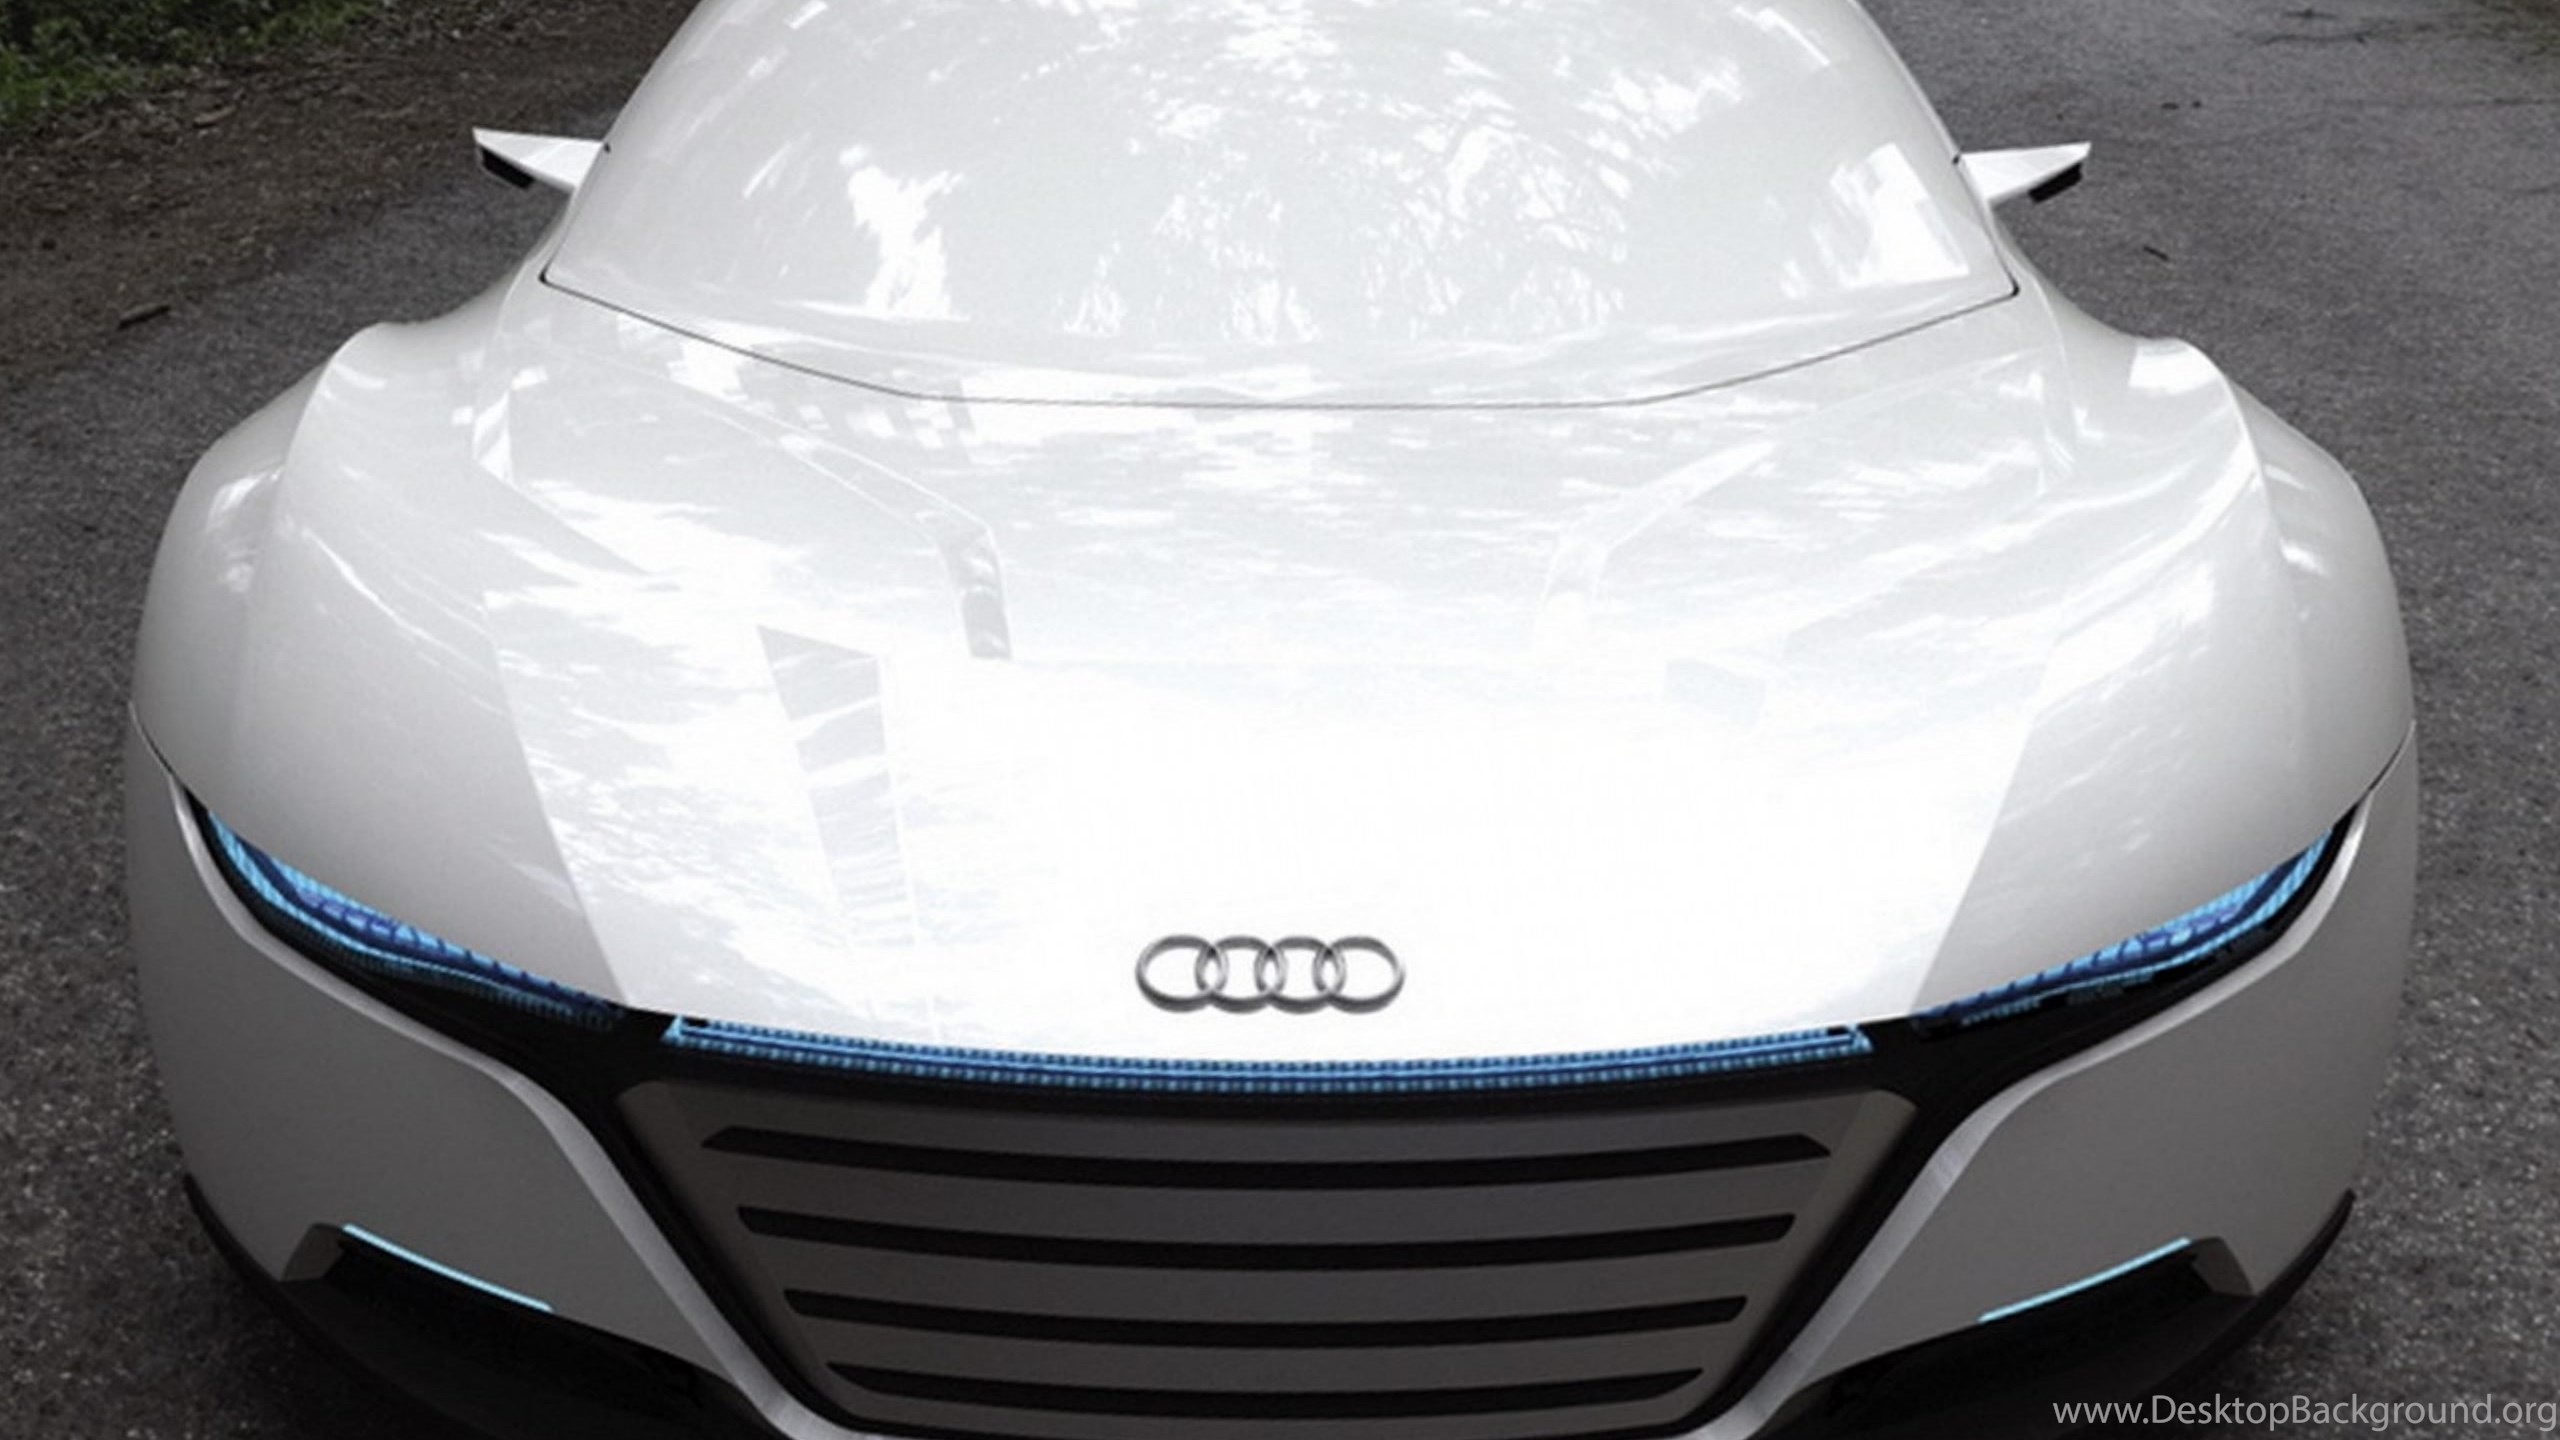 Audi Concept Car Wallpapers Desktop Background